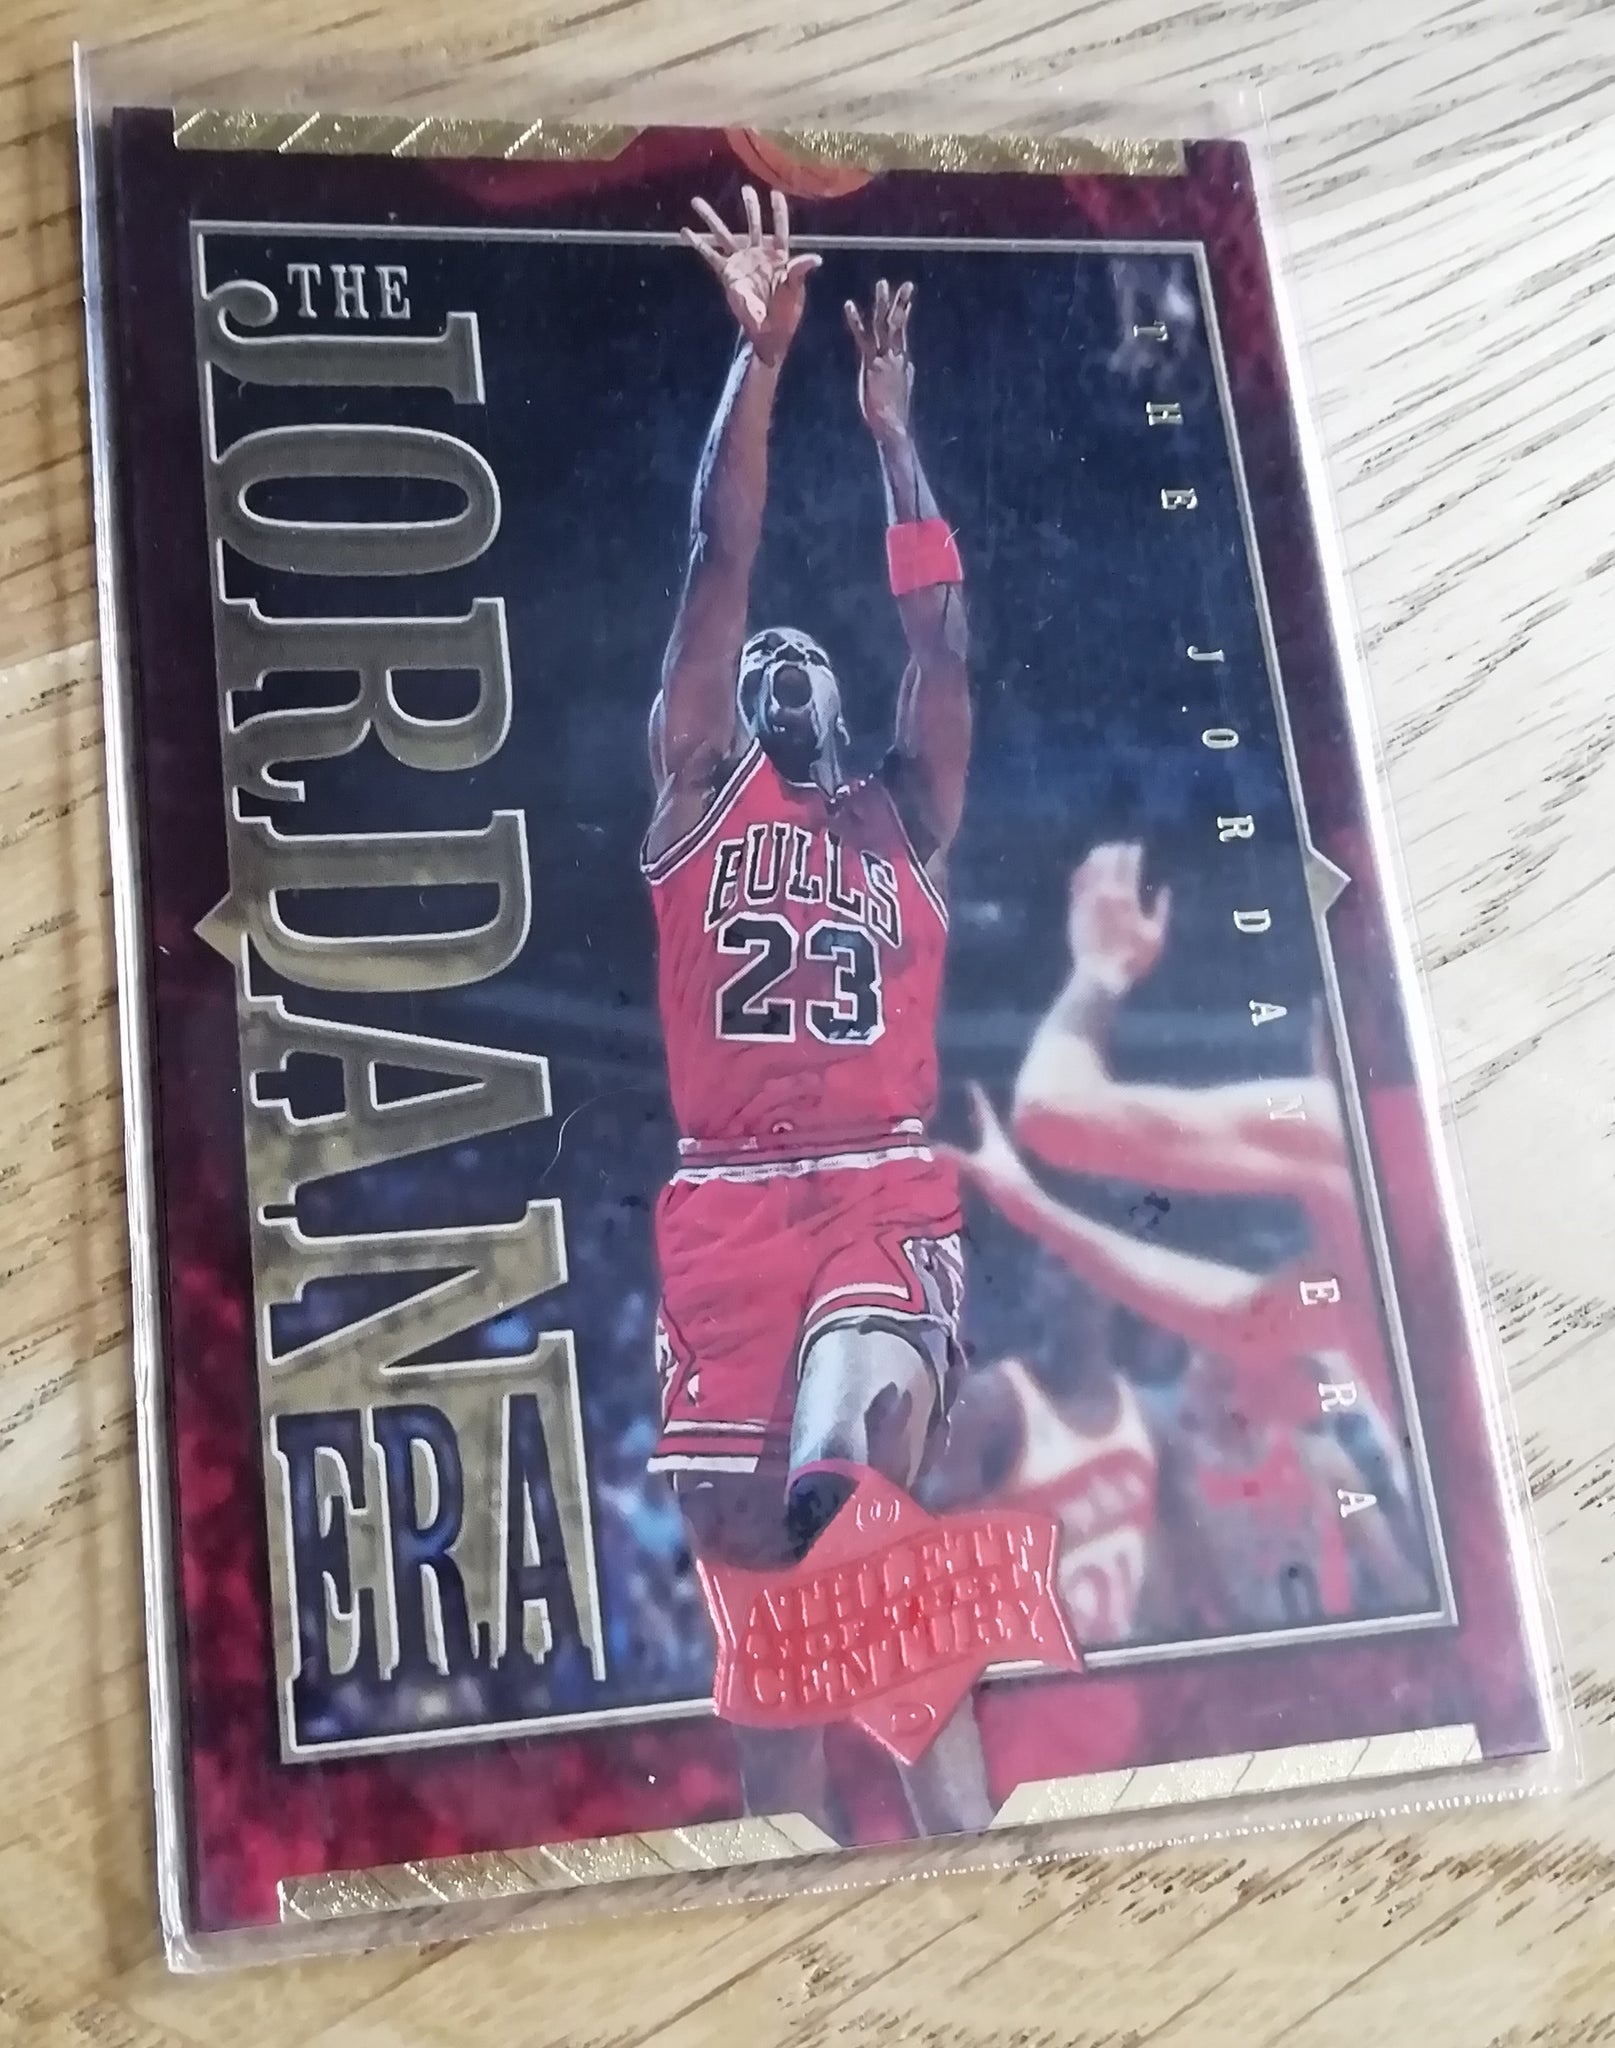 1999 Athlete of the Century Jordan Era #JE4 Trading Card NM